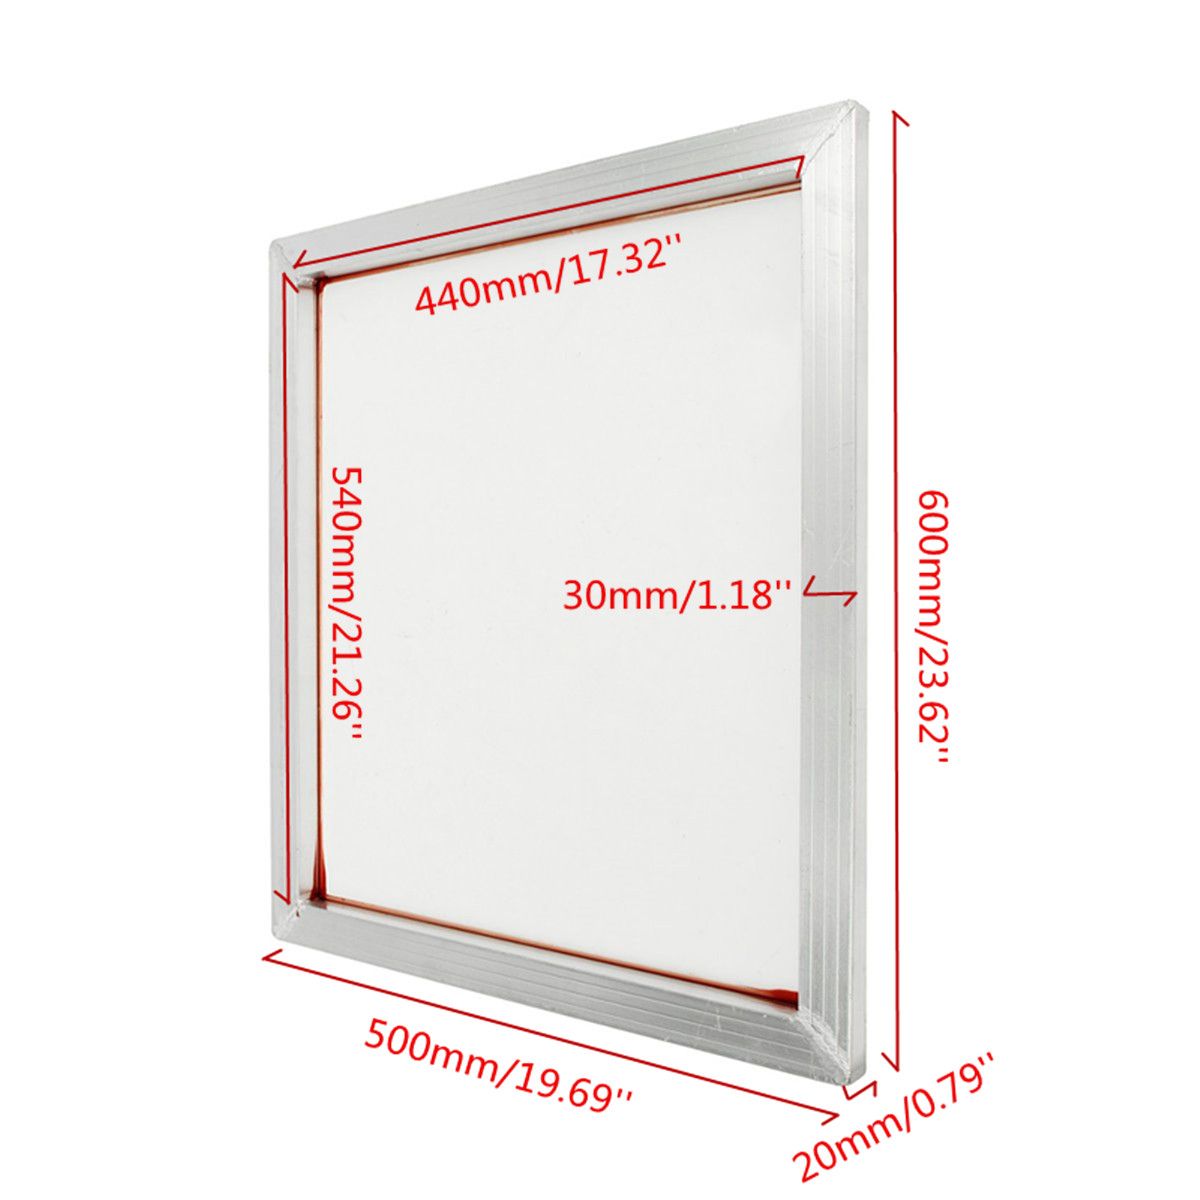 24x20-Aluminum-Silk-Screen-Printing-Press-Screens-Frame-With-230-Mesh-Count-1382447